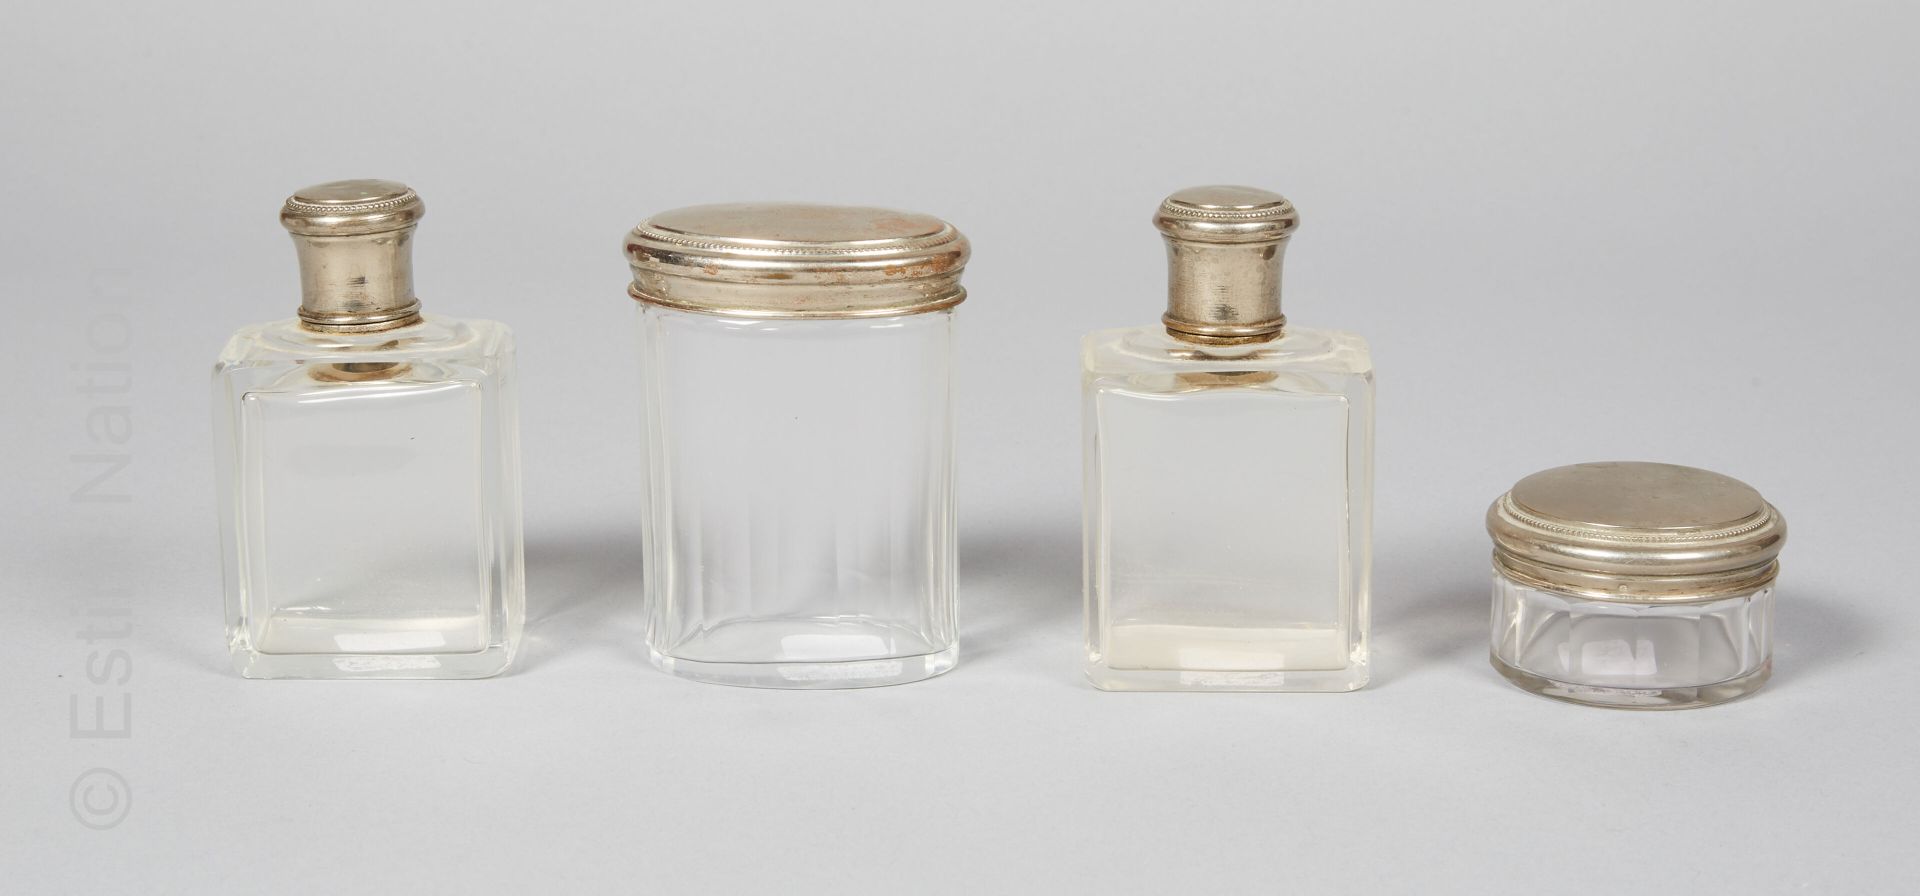 MÉTAL ARGENTÉ 模制玻璃洗漱用品套装，镀银金属框架，装饰有珍珠楣。它包括两个长方形的瓶子和两个有盖的盒子，一个是椭圆形的，一个是有切边的圆形。


&hellip;